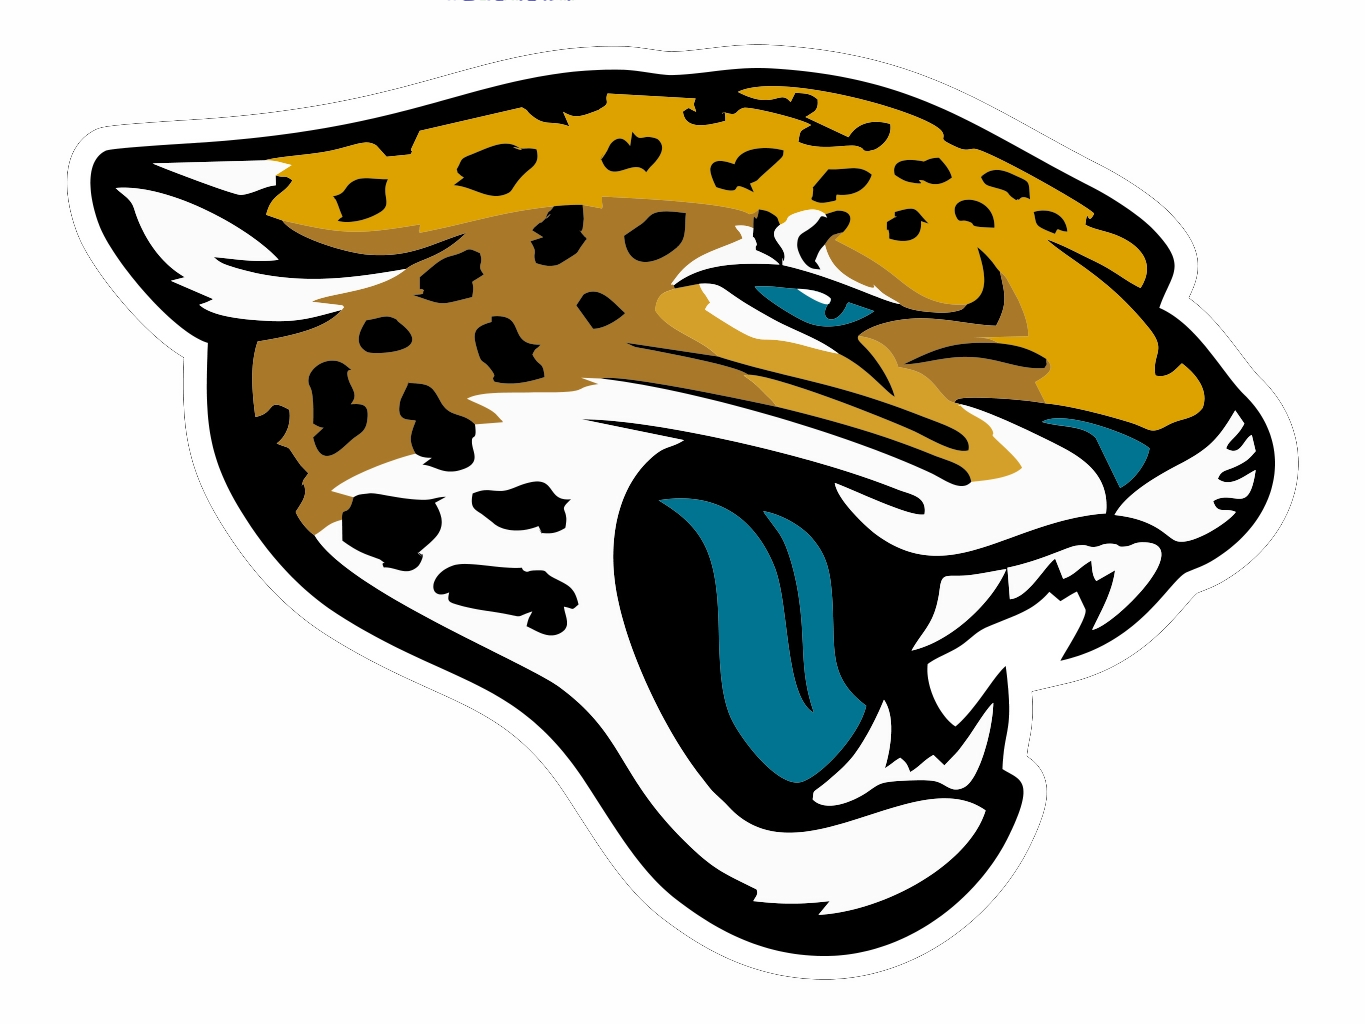 Free Jaguars Logo Png, Download Free Jaguars Logo Png png images, Free ...